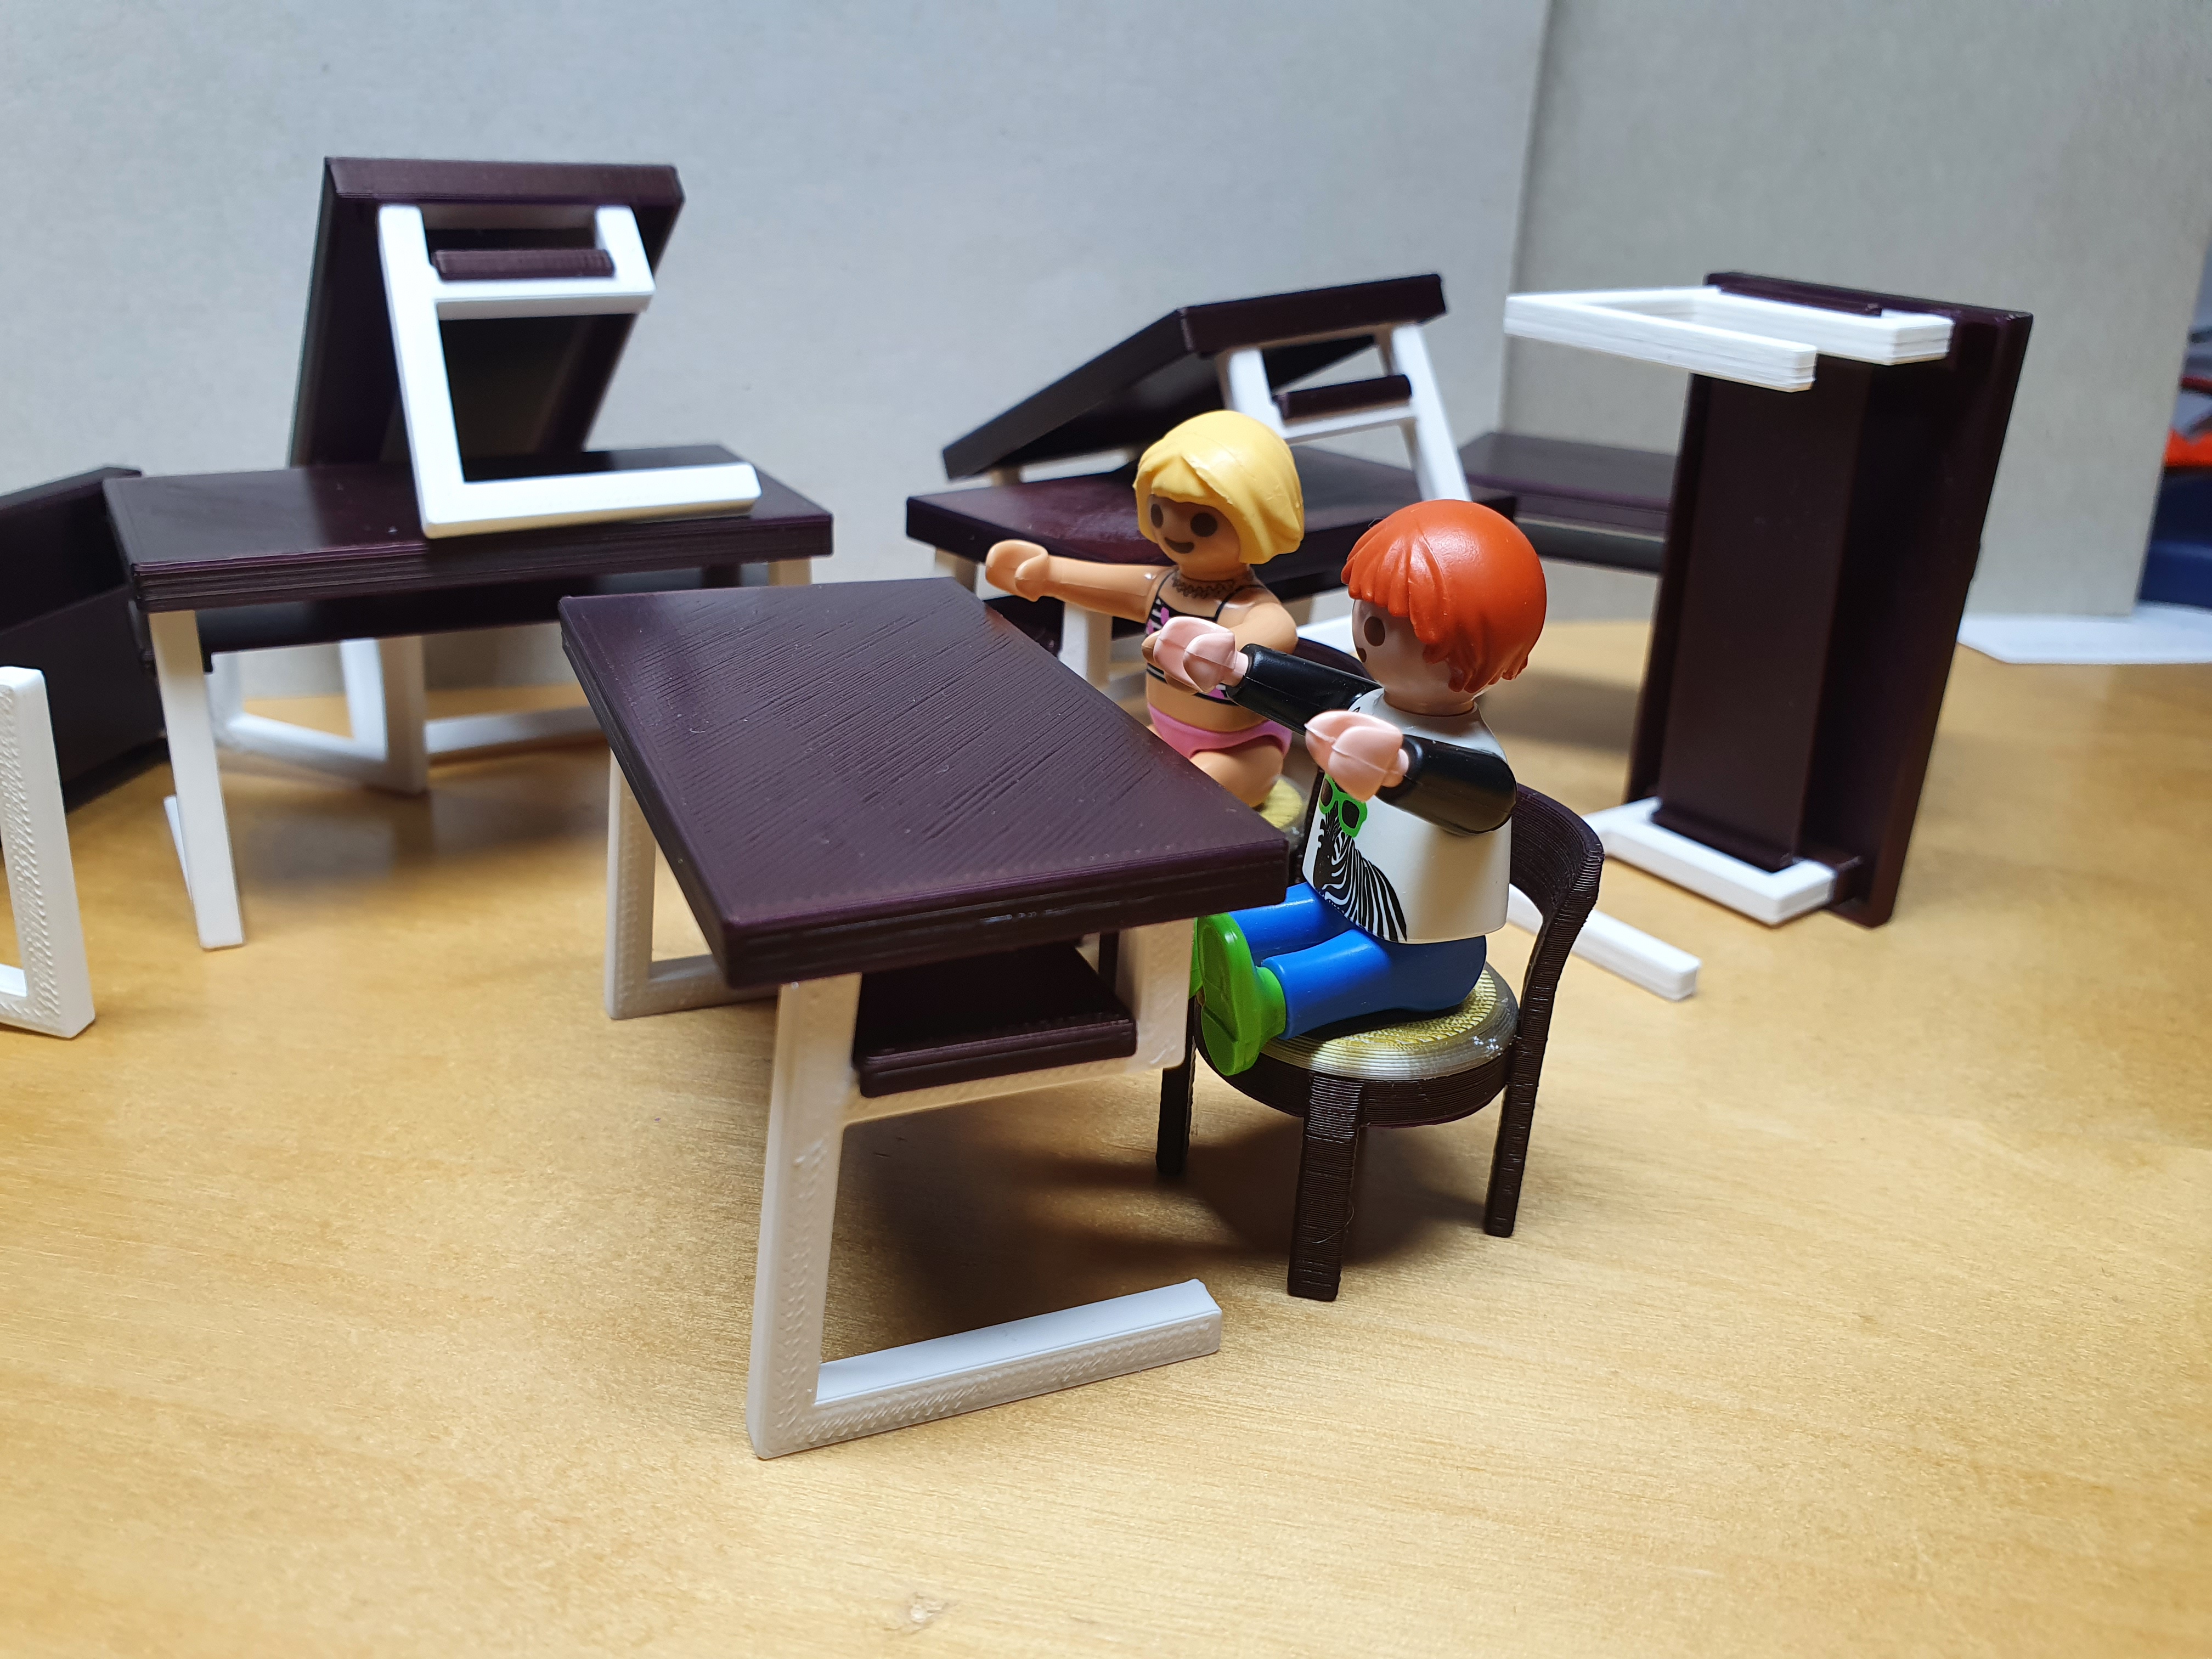 Playmobil compatible school desk